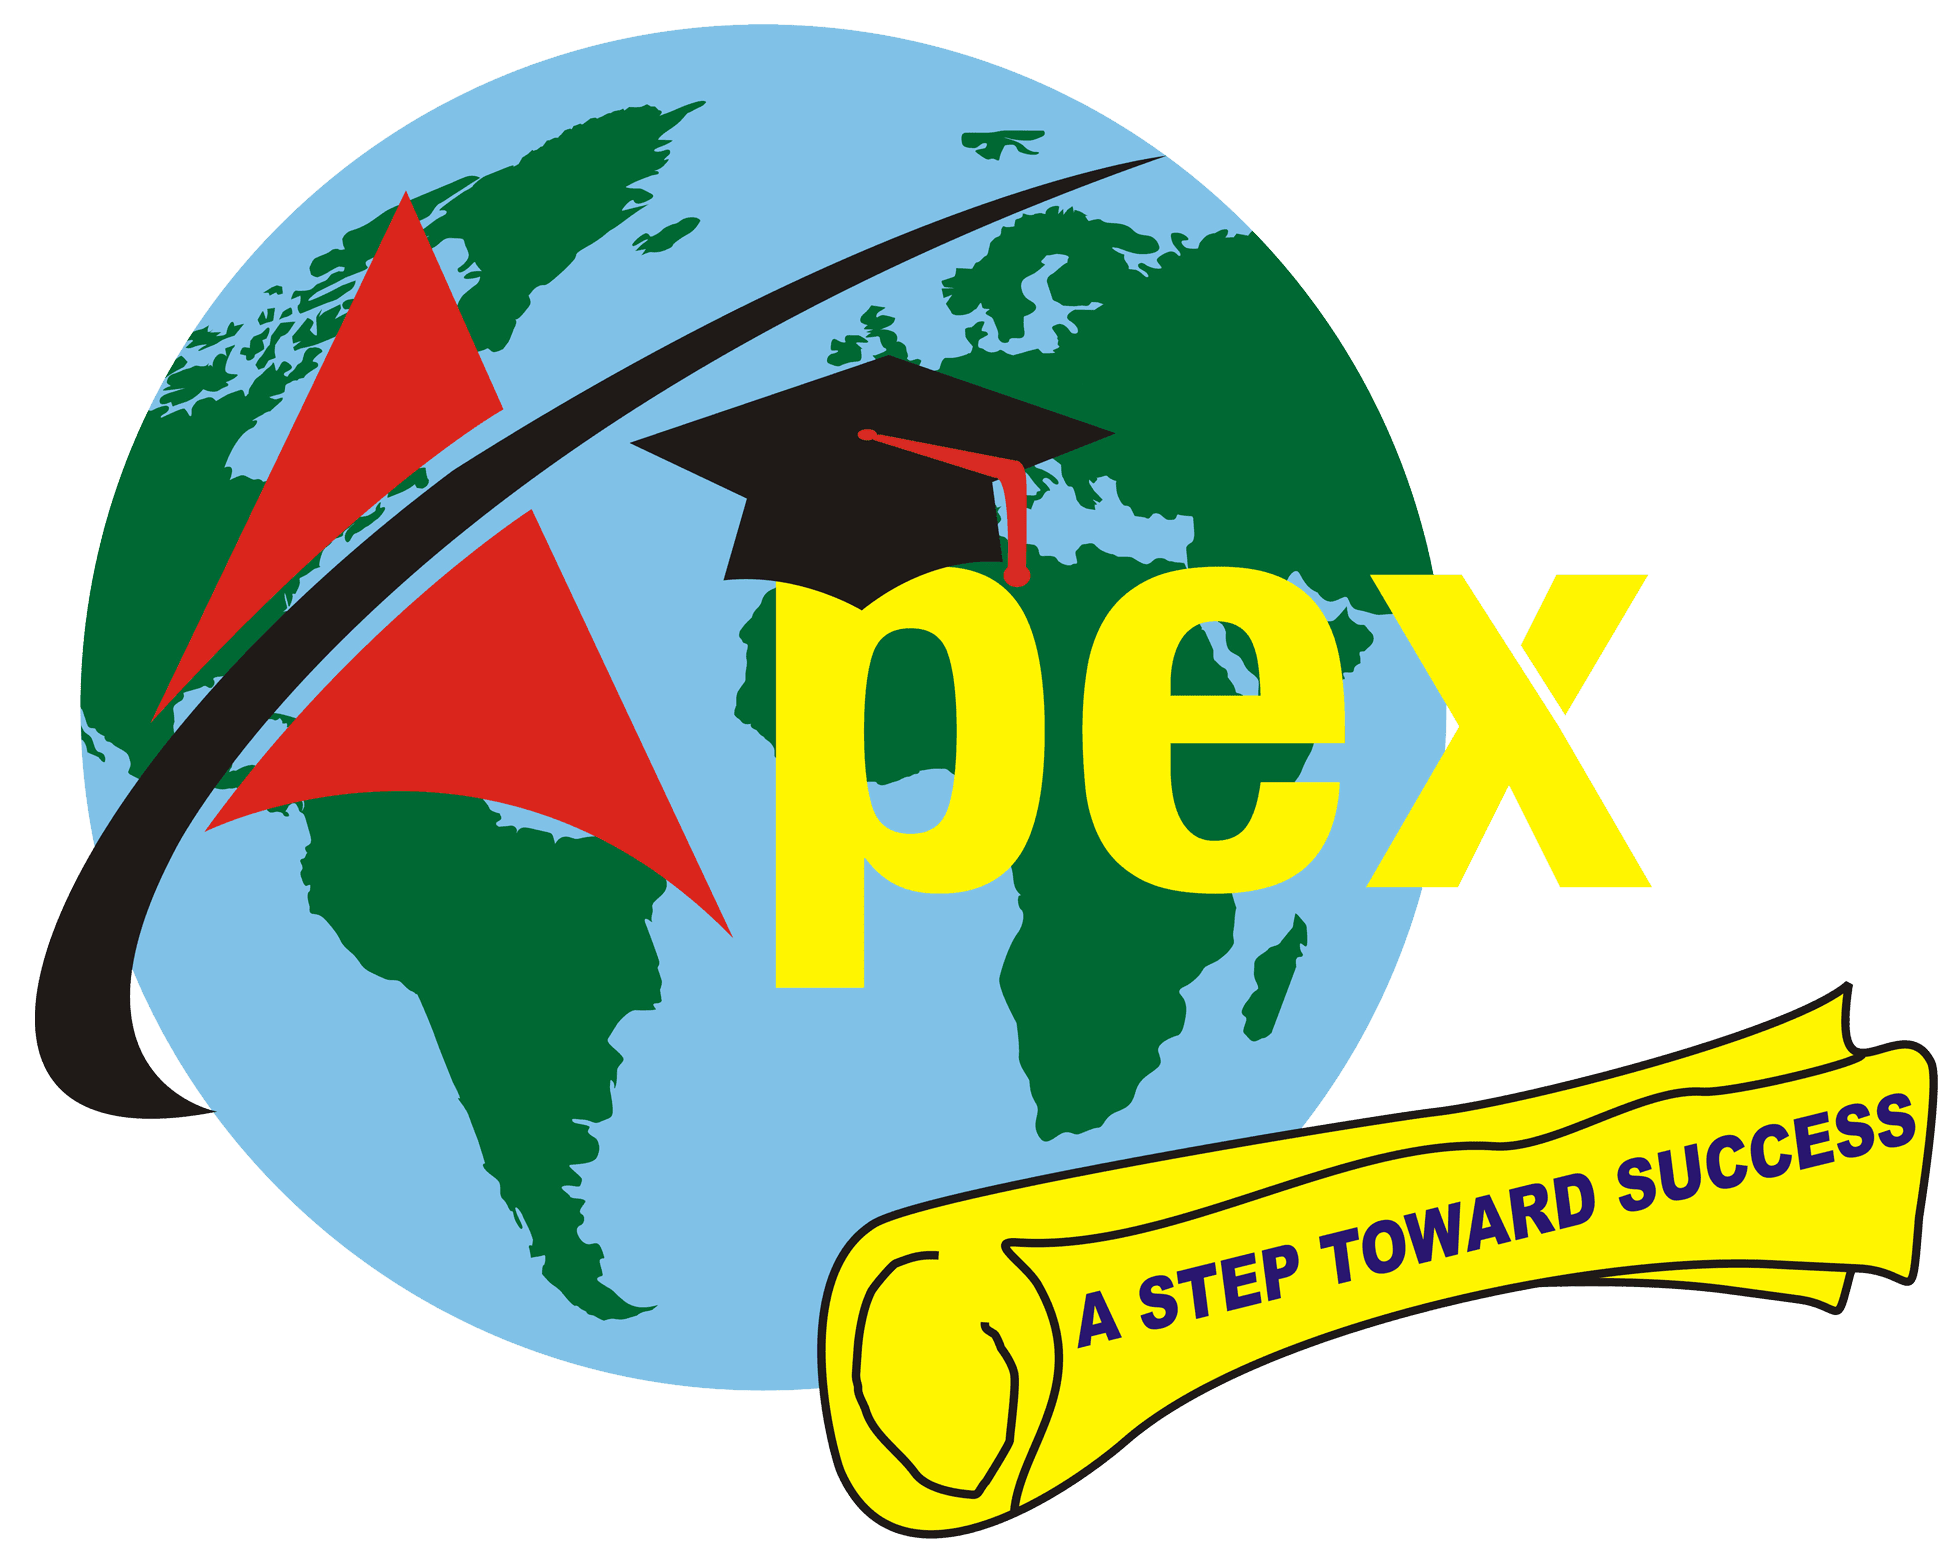 Apex - A step towards success